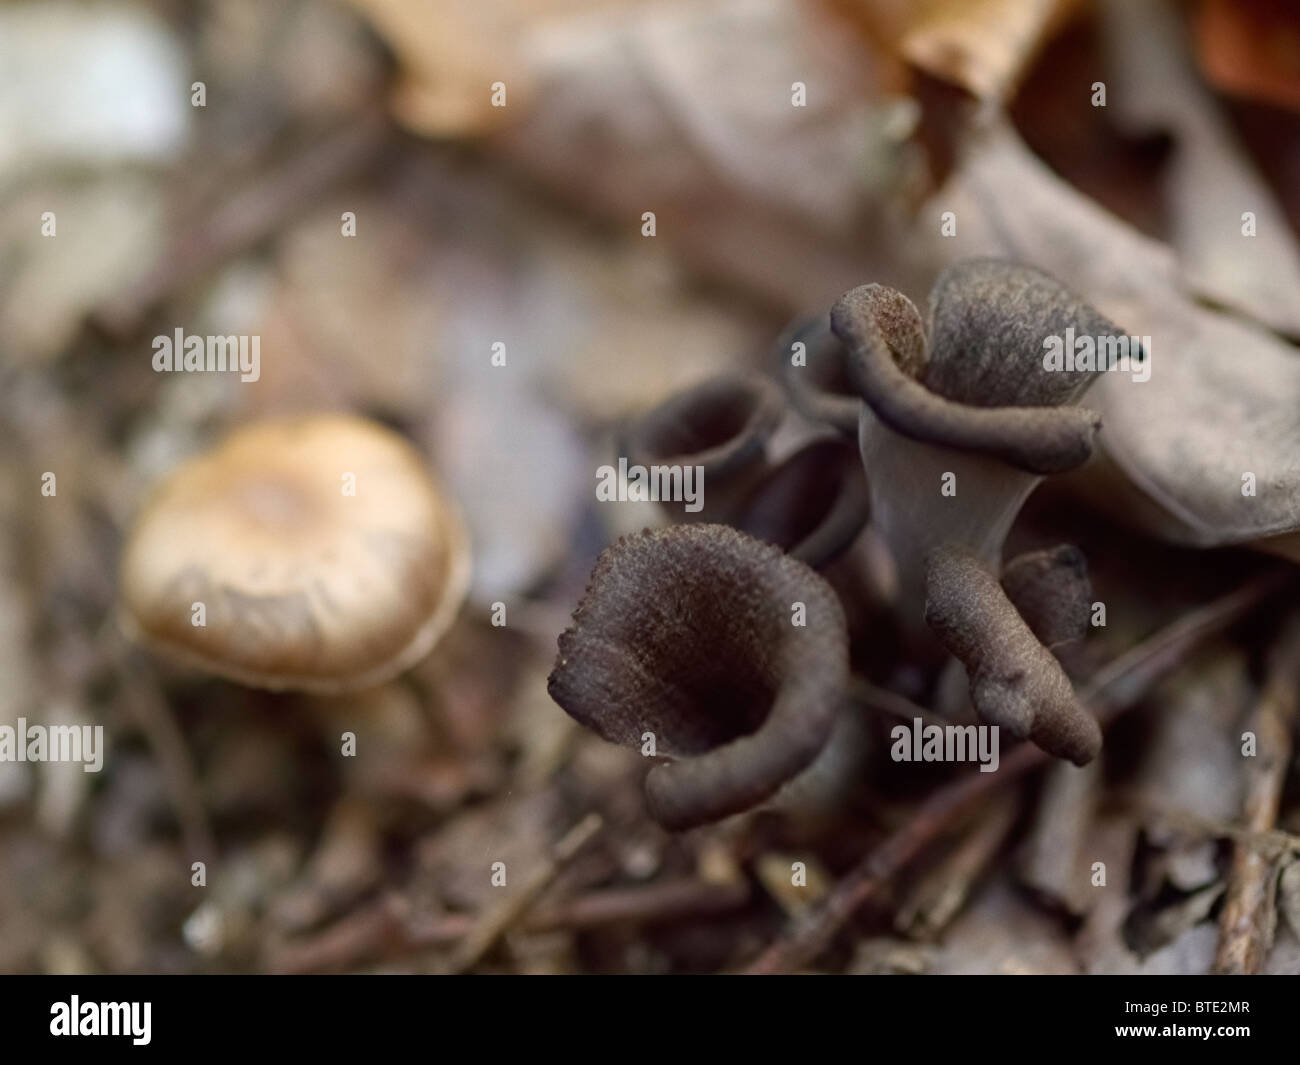 Mushroom from the Martin Breg hill forest, near Dugo Selo, Croatia. Stock Photo